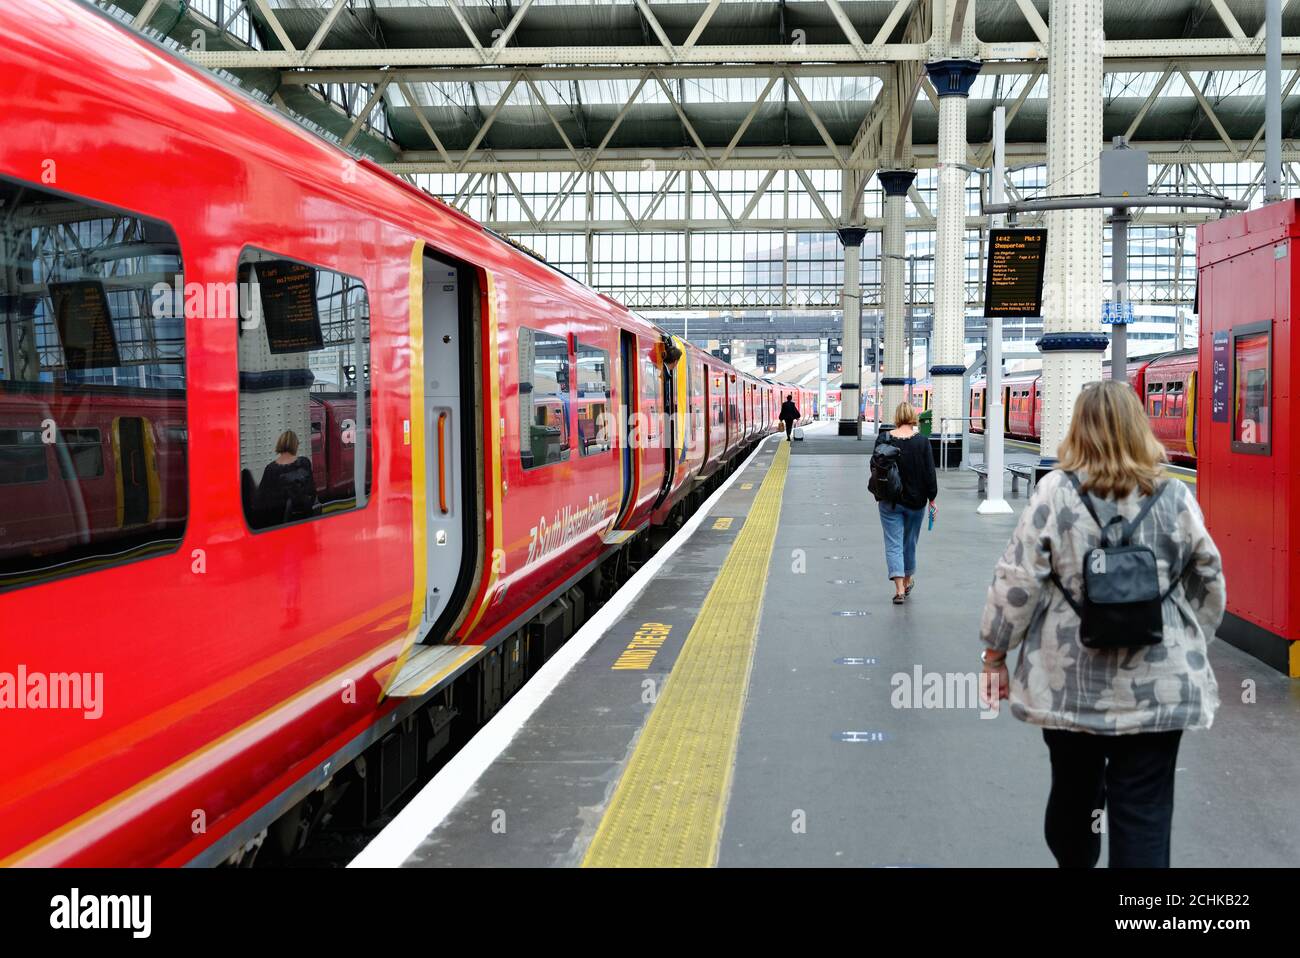 A South Western Railway commuter train on platform at Waterloo station London England UK Stock Photo